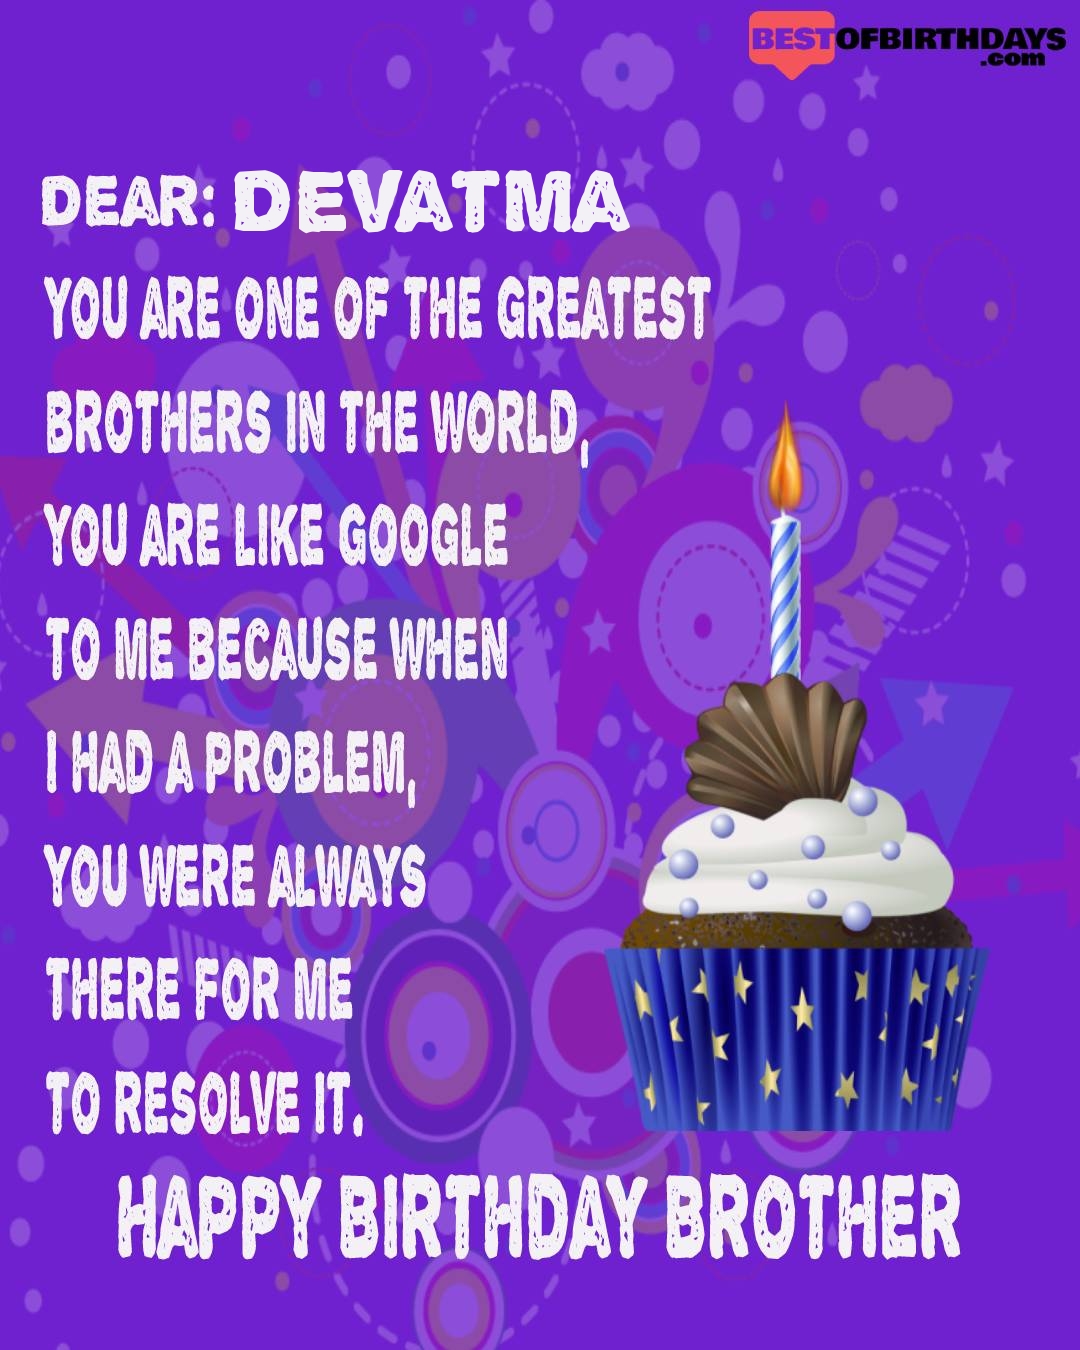 Happy birthday devatma bhai brother bro